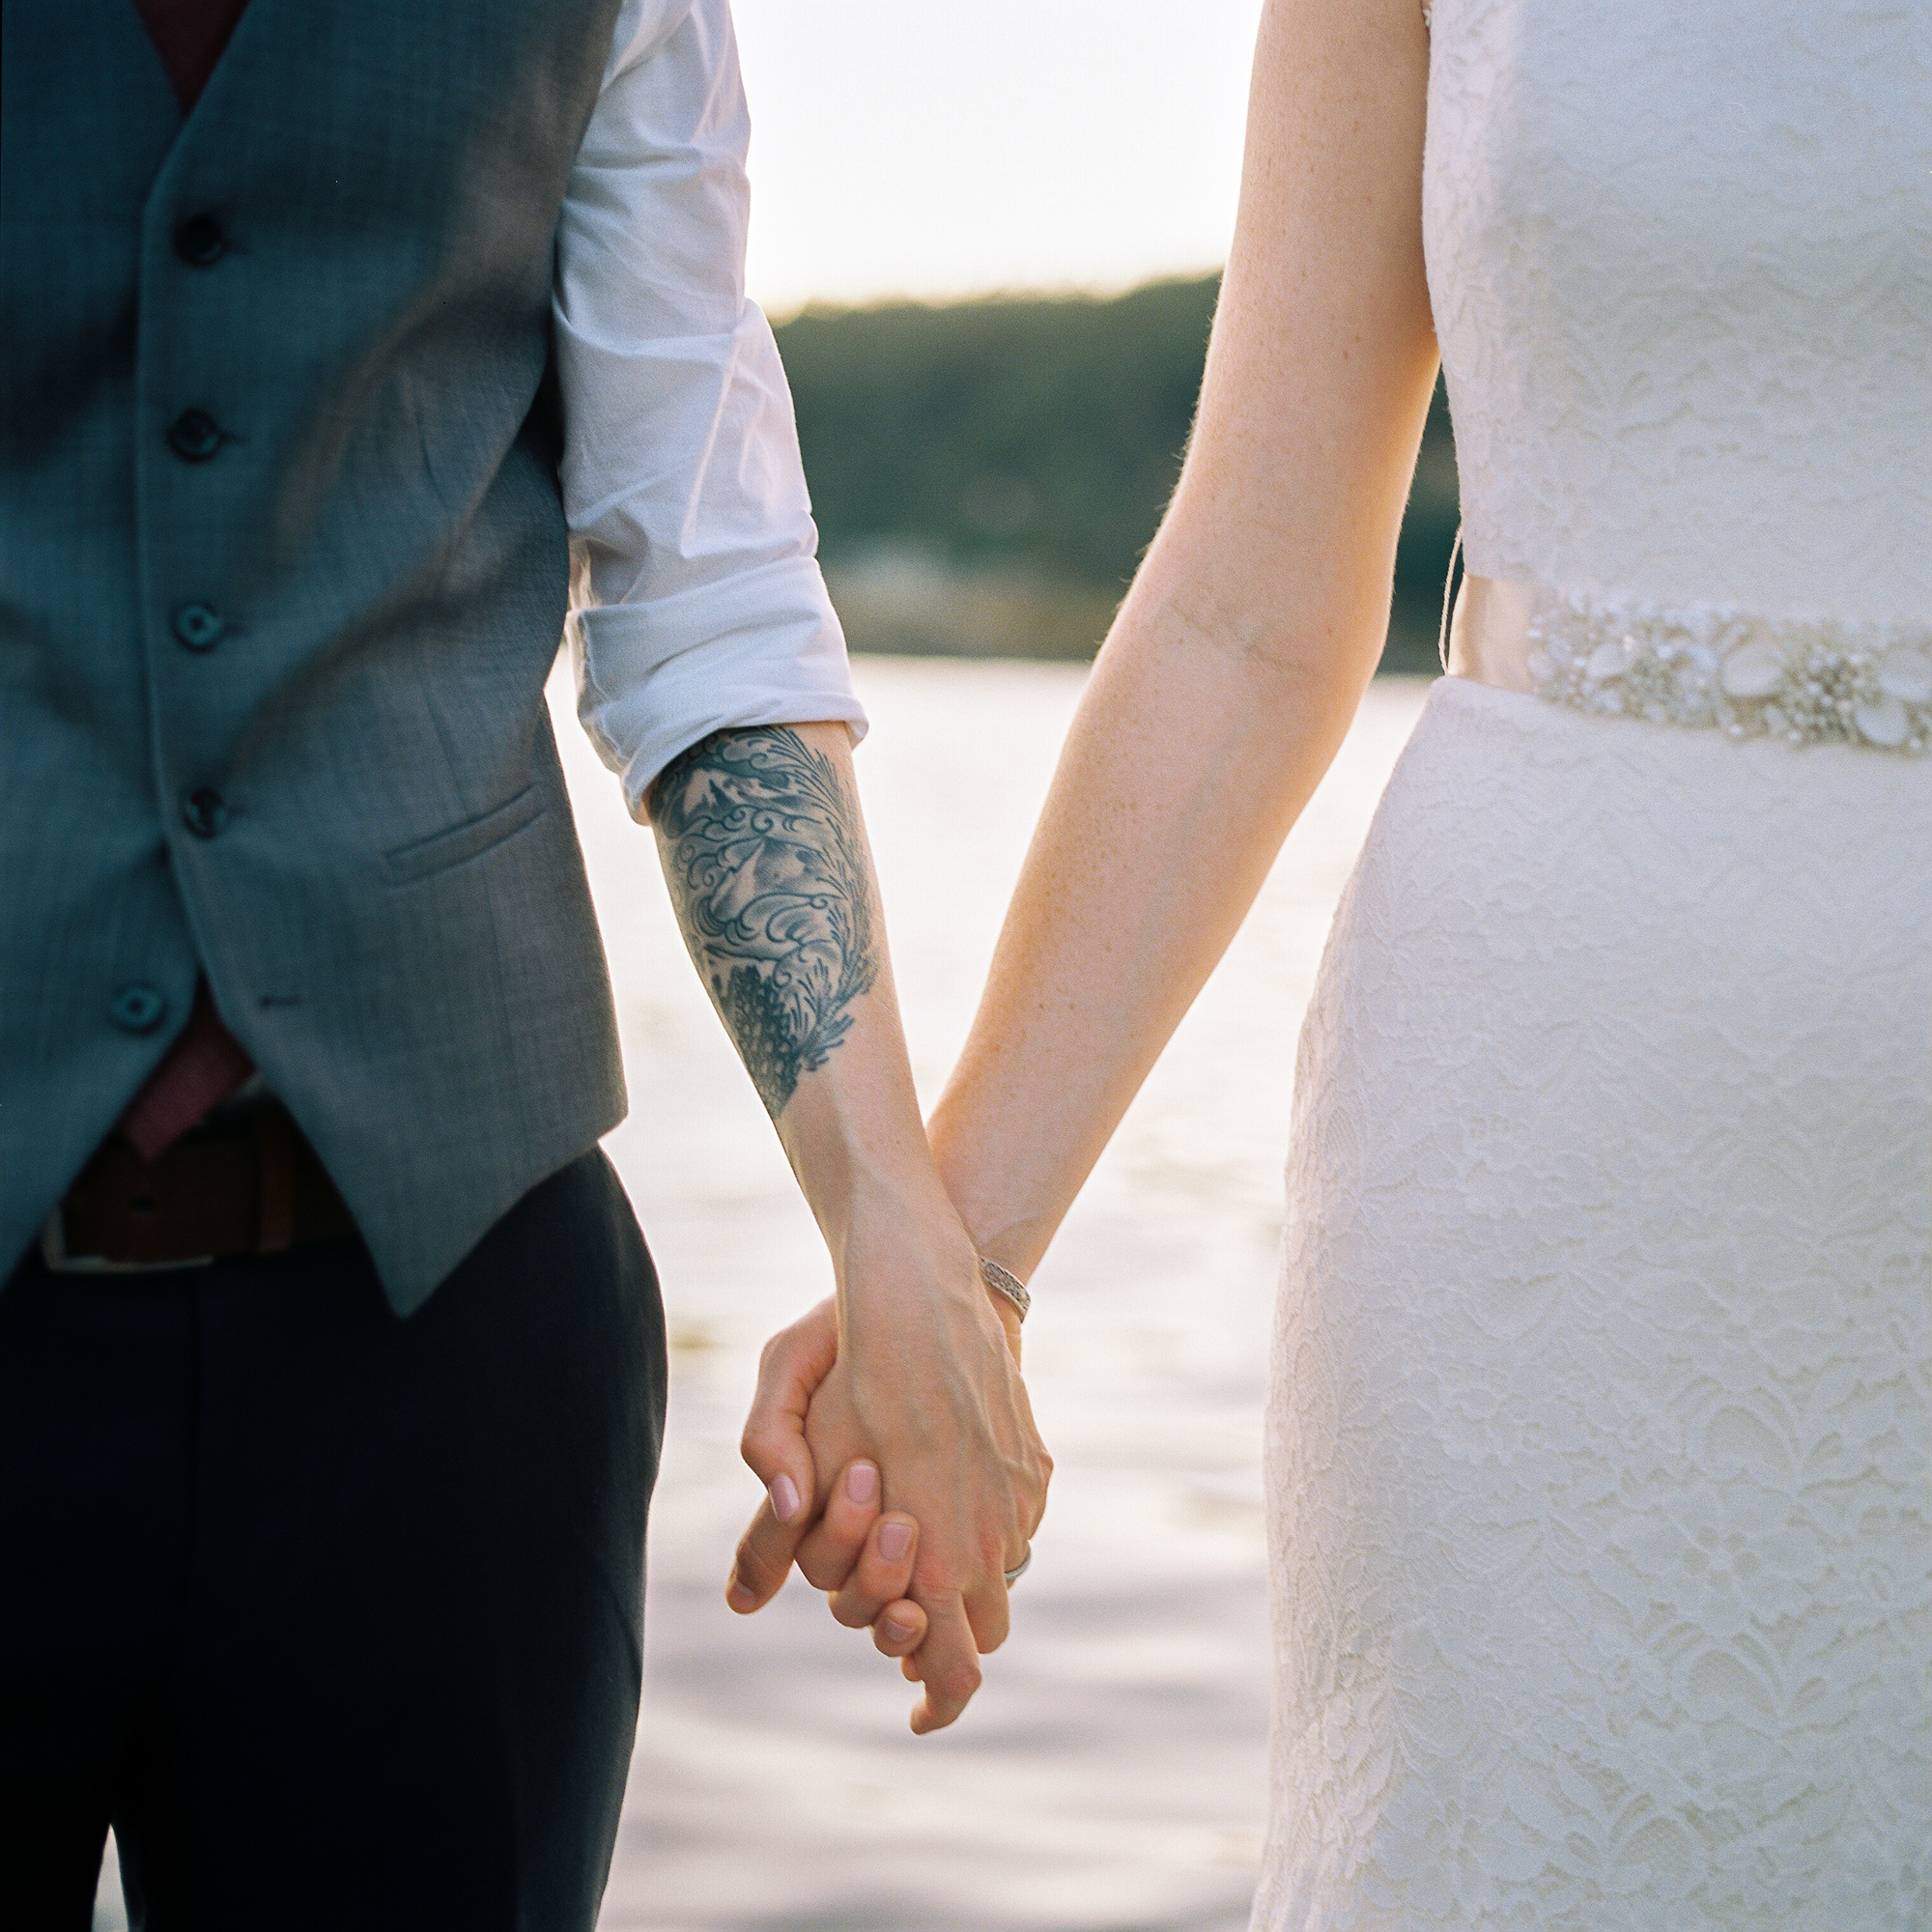 Plum Burgundy Wedding — San Juan Islands Wedding Oddfellows Hall — The Overwhelmed Bride Wedding Blog